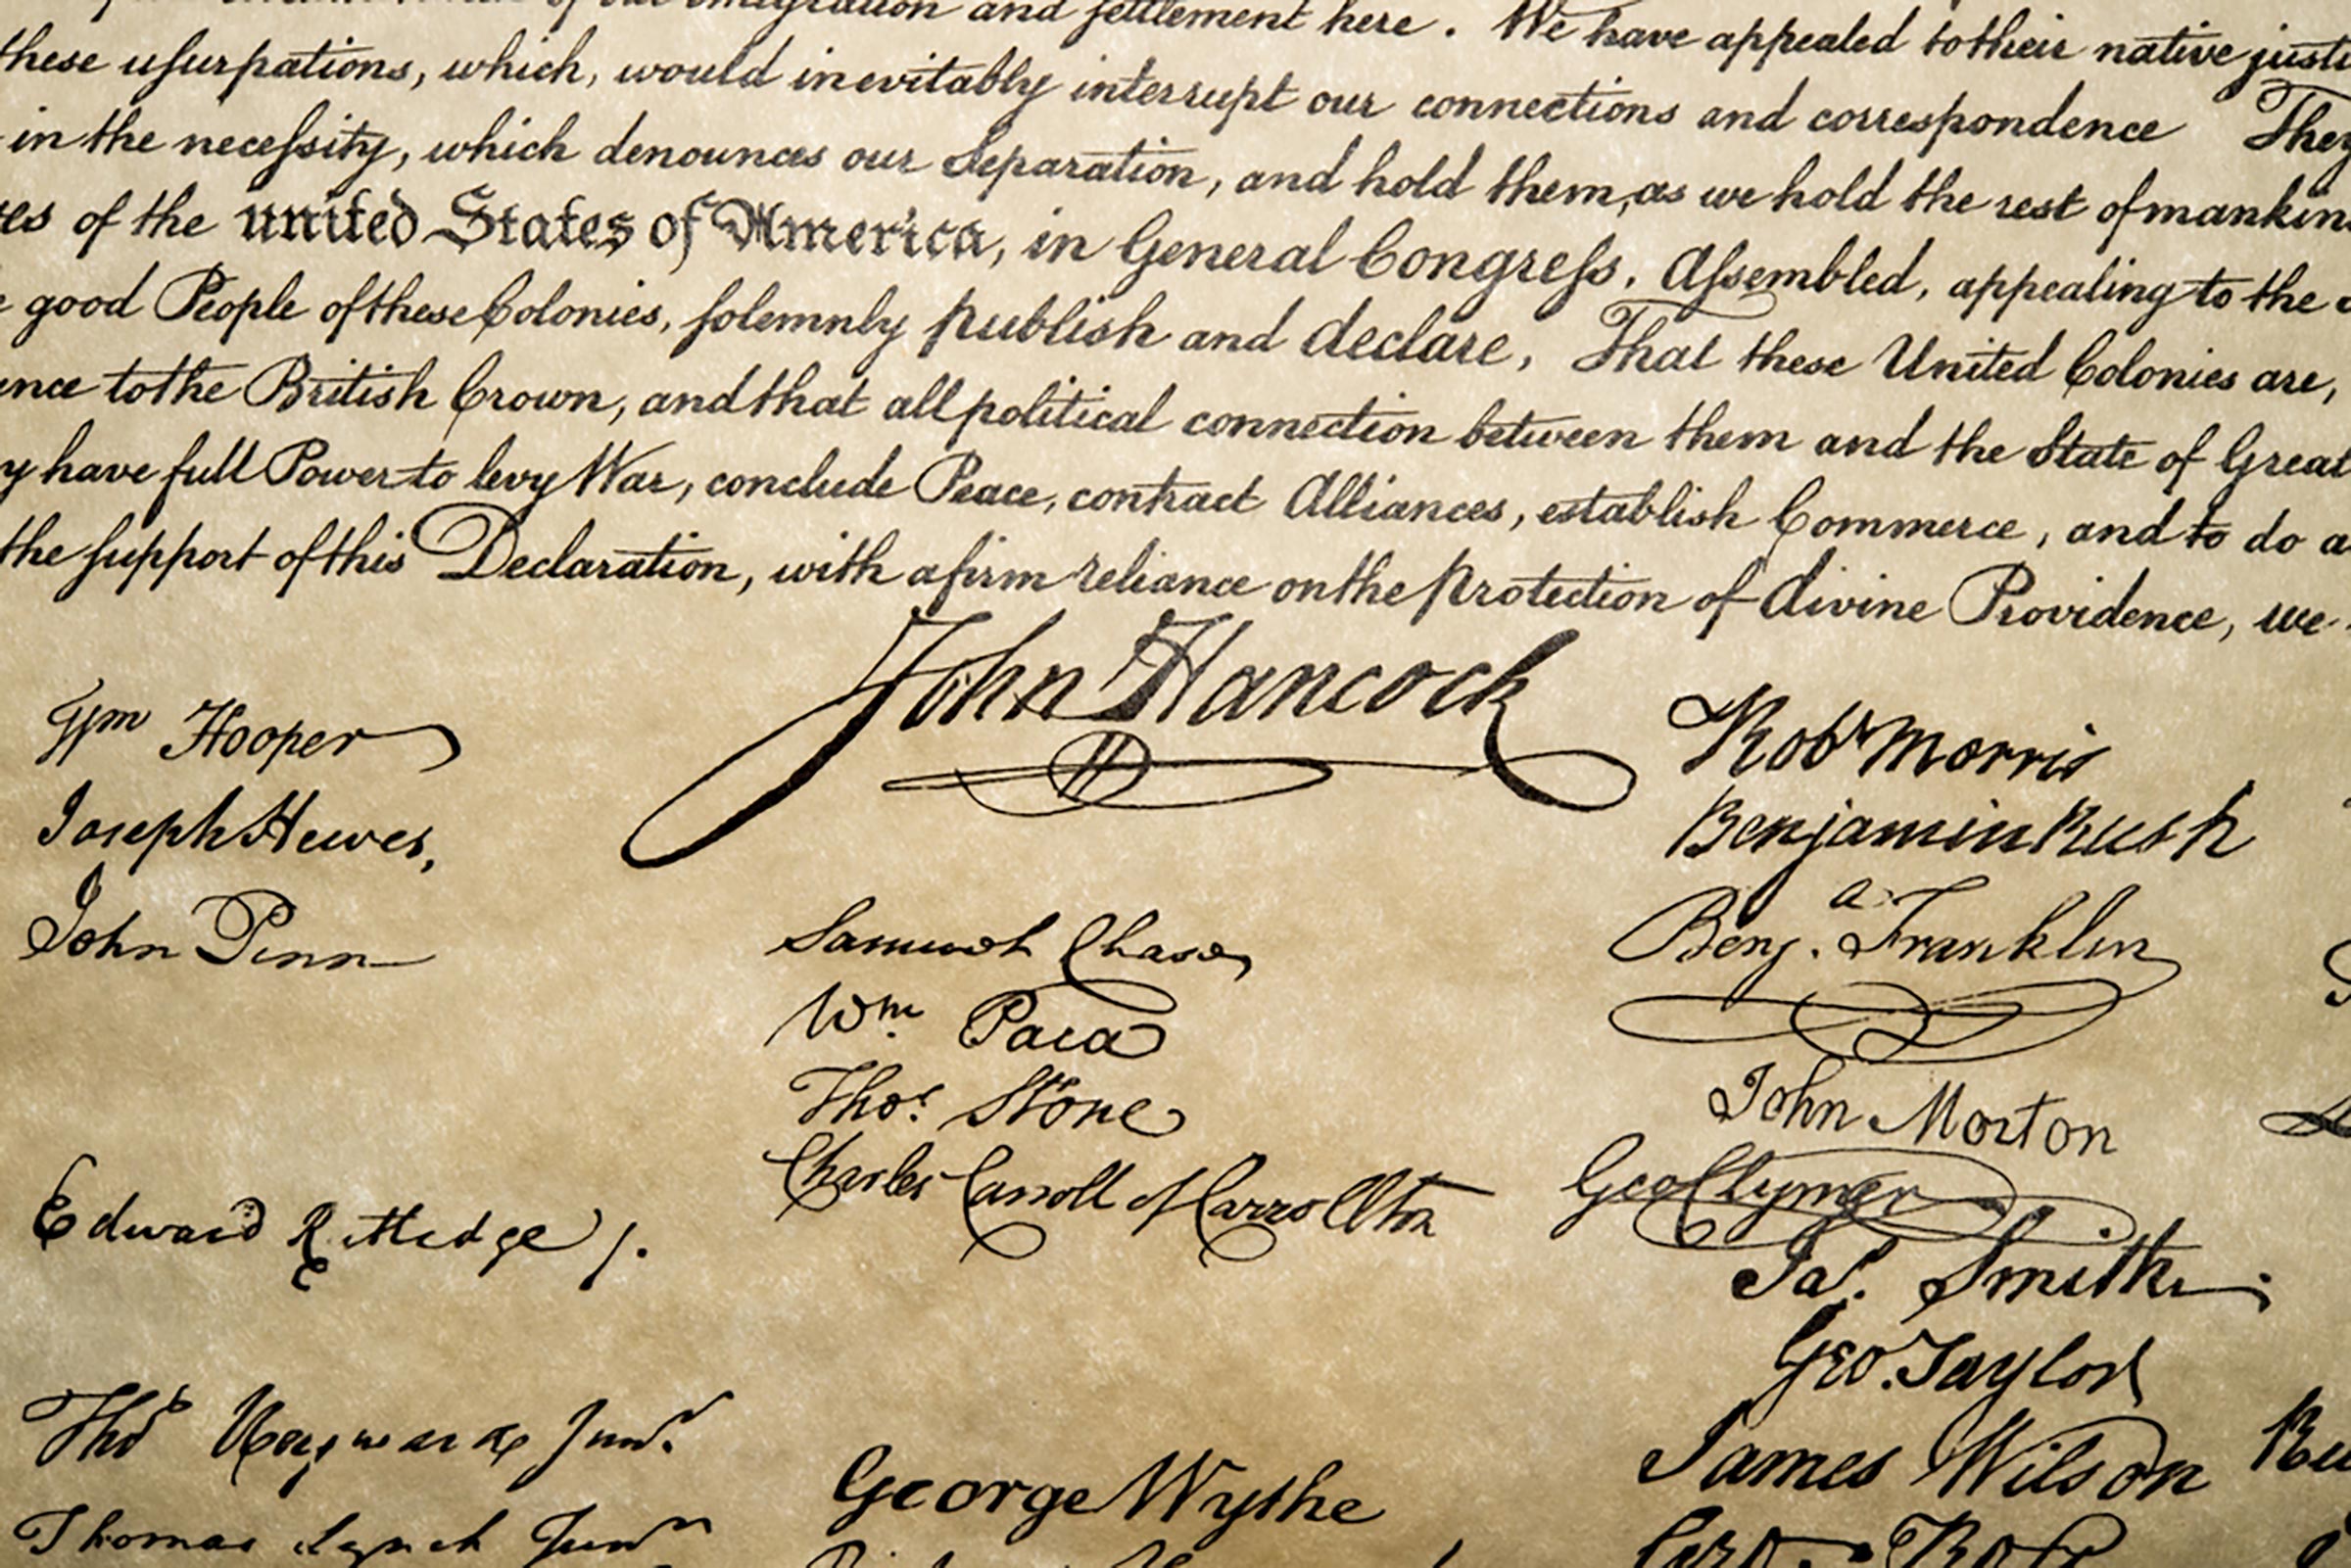 Image result for declaration of independence